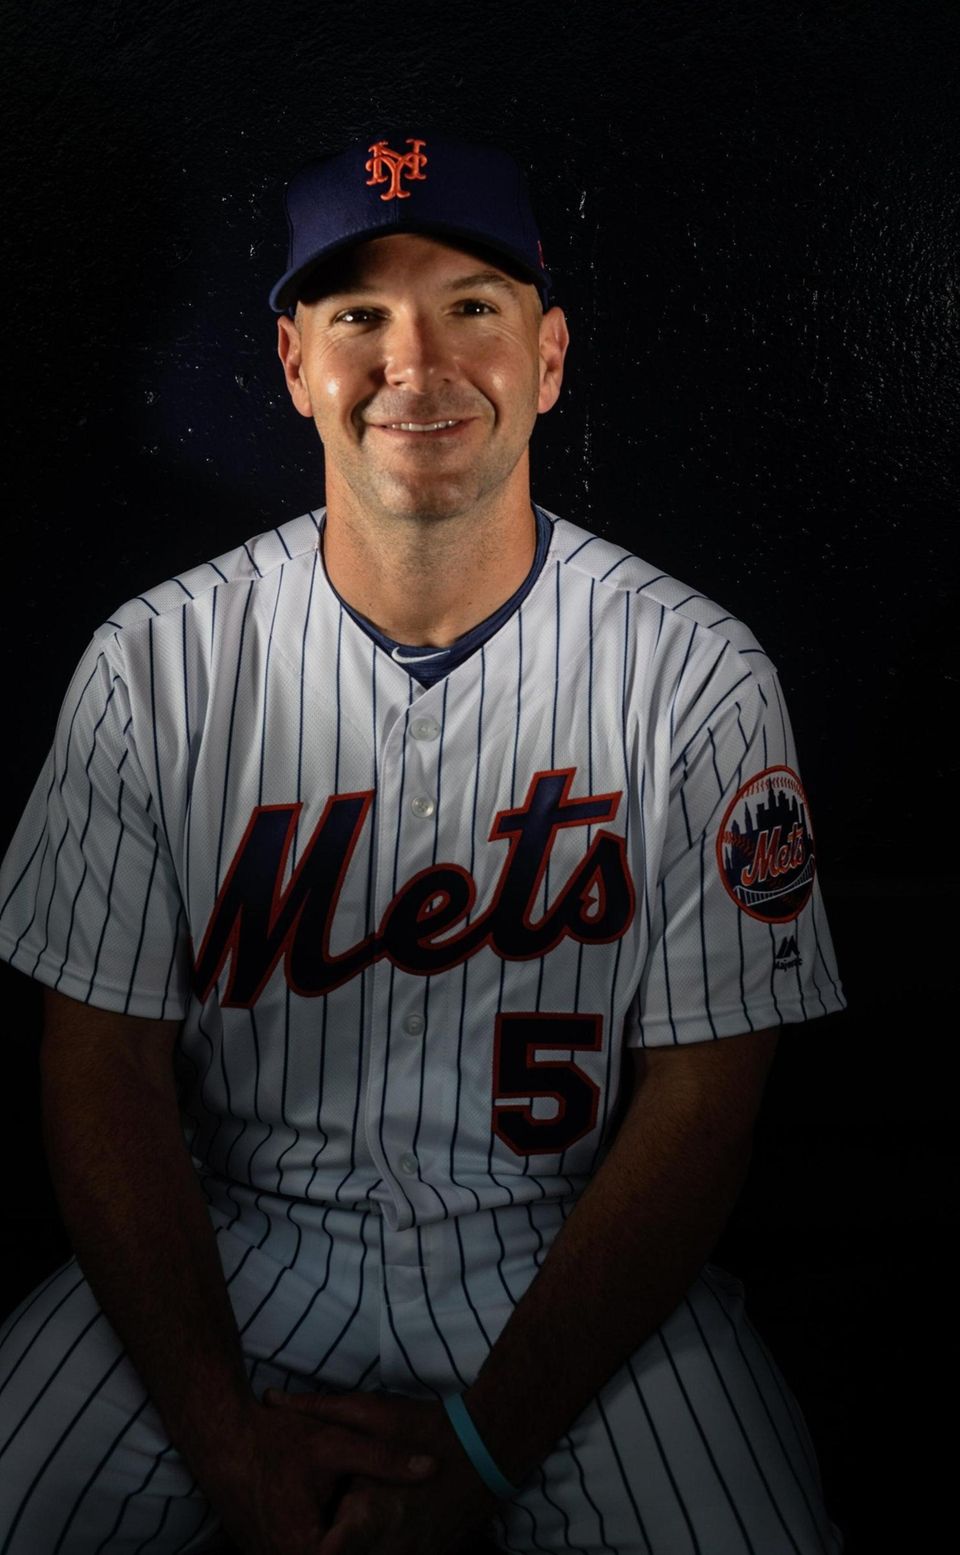 New York Mets bullpen catcher, Dave Racaniello during